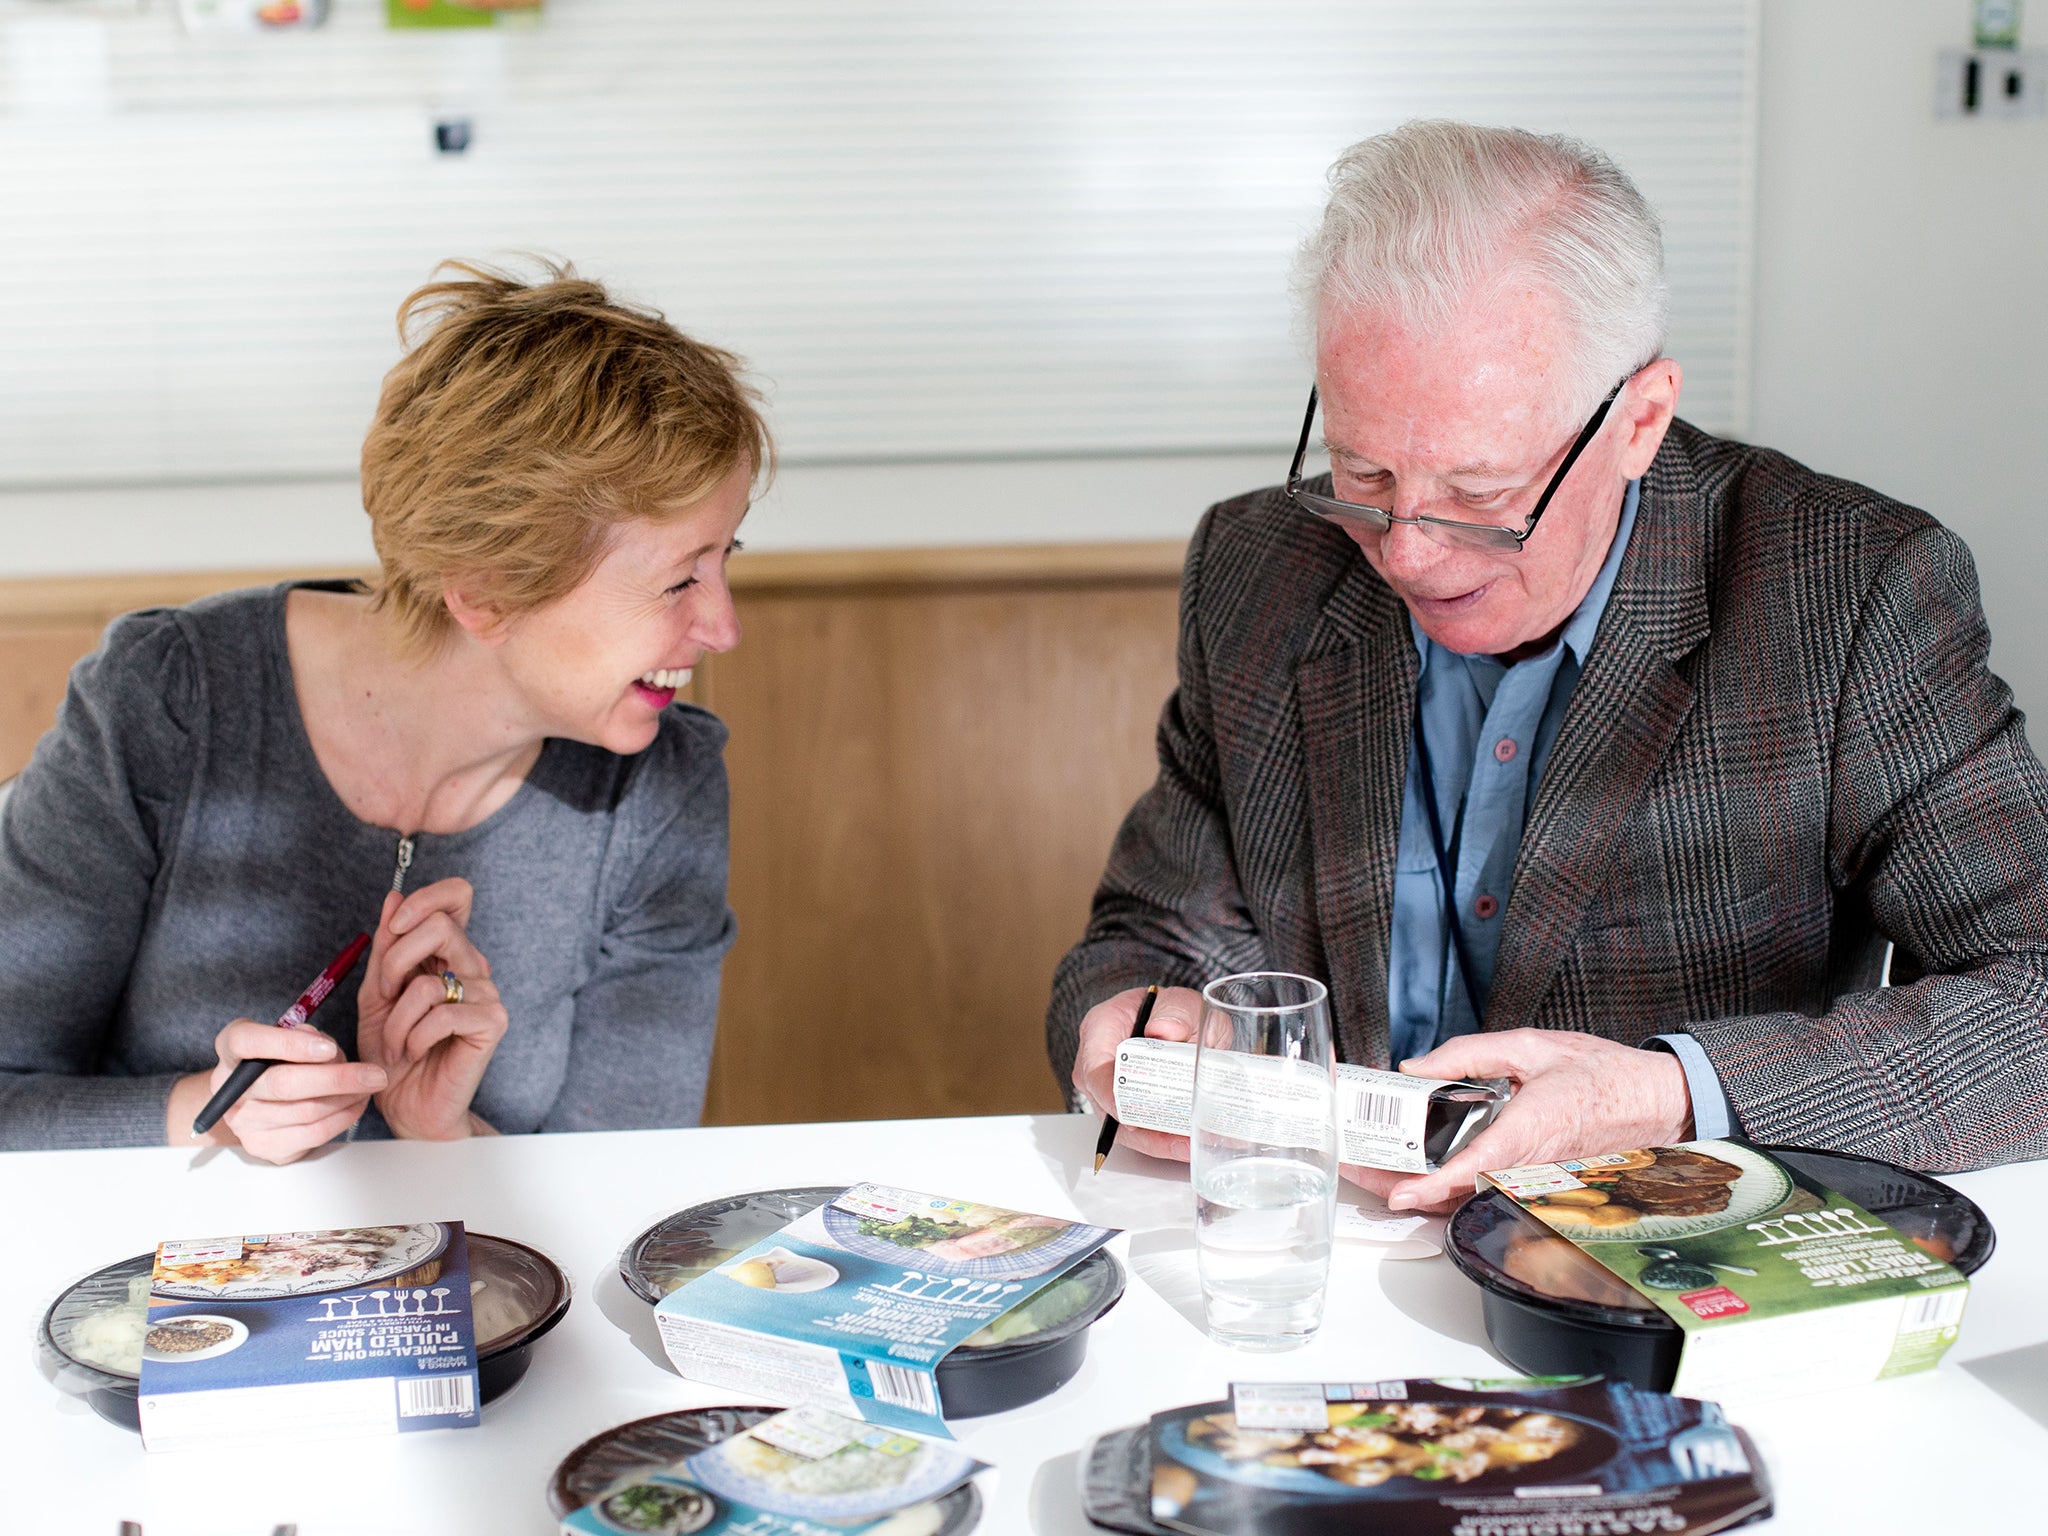 Taste test: Rosie Millard and her father John examine the M&S meals